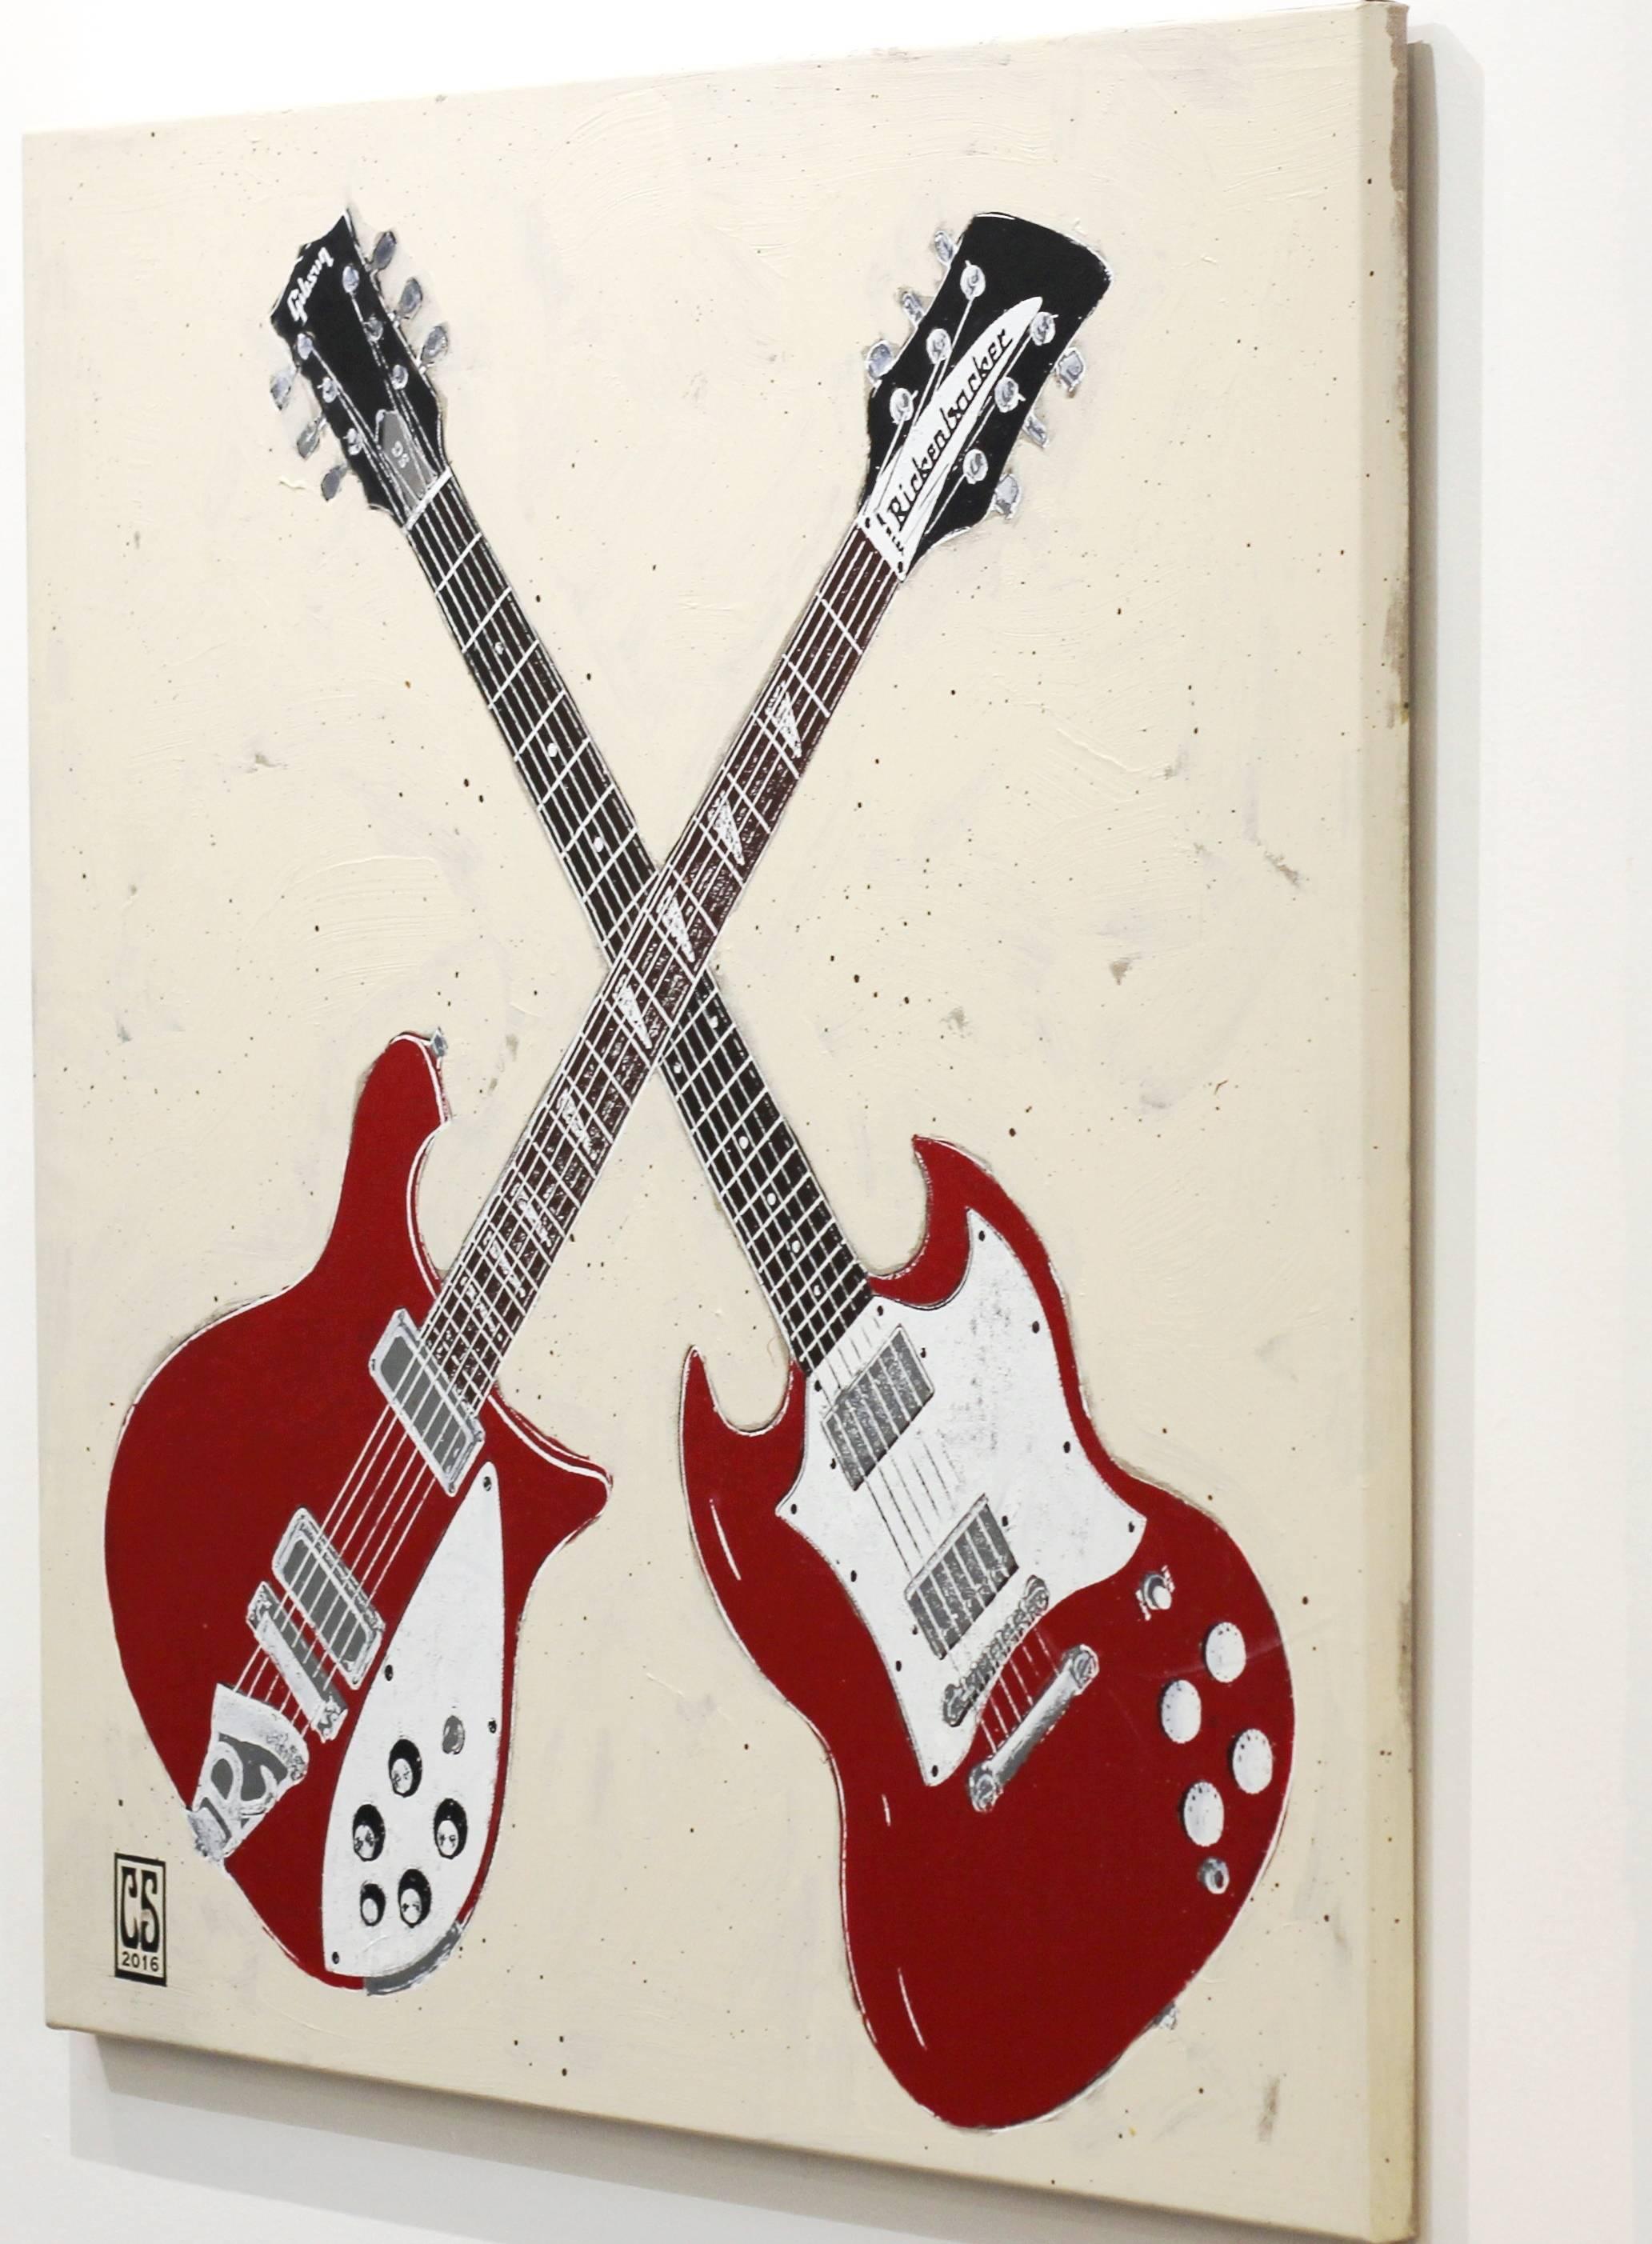 Double Trouble - Two Red Guitars, Original-Musikinstrumentgemälde auf Leinwand (Pop-Art), Painting, von Carl Smith